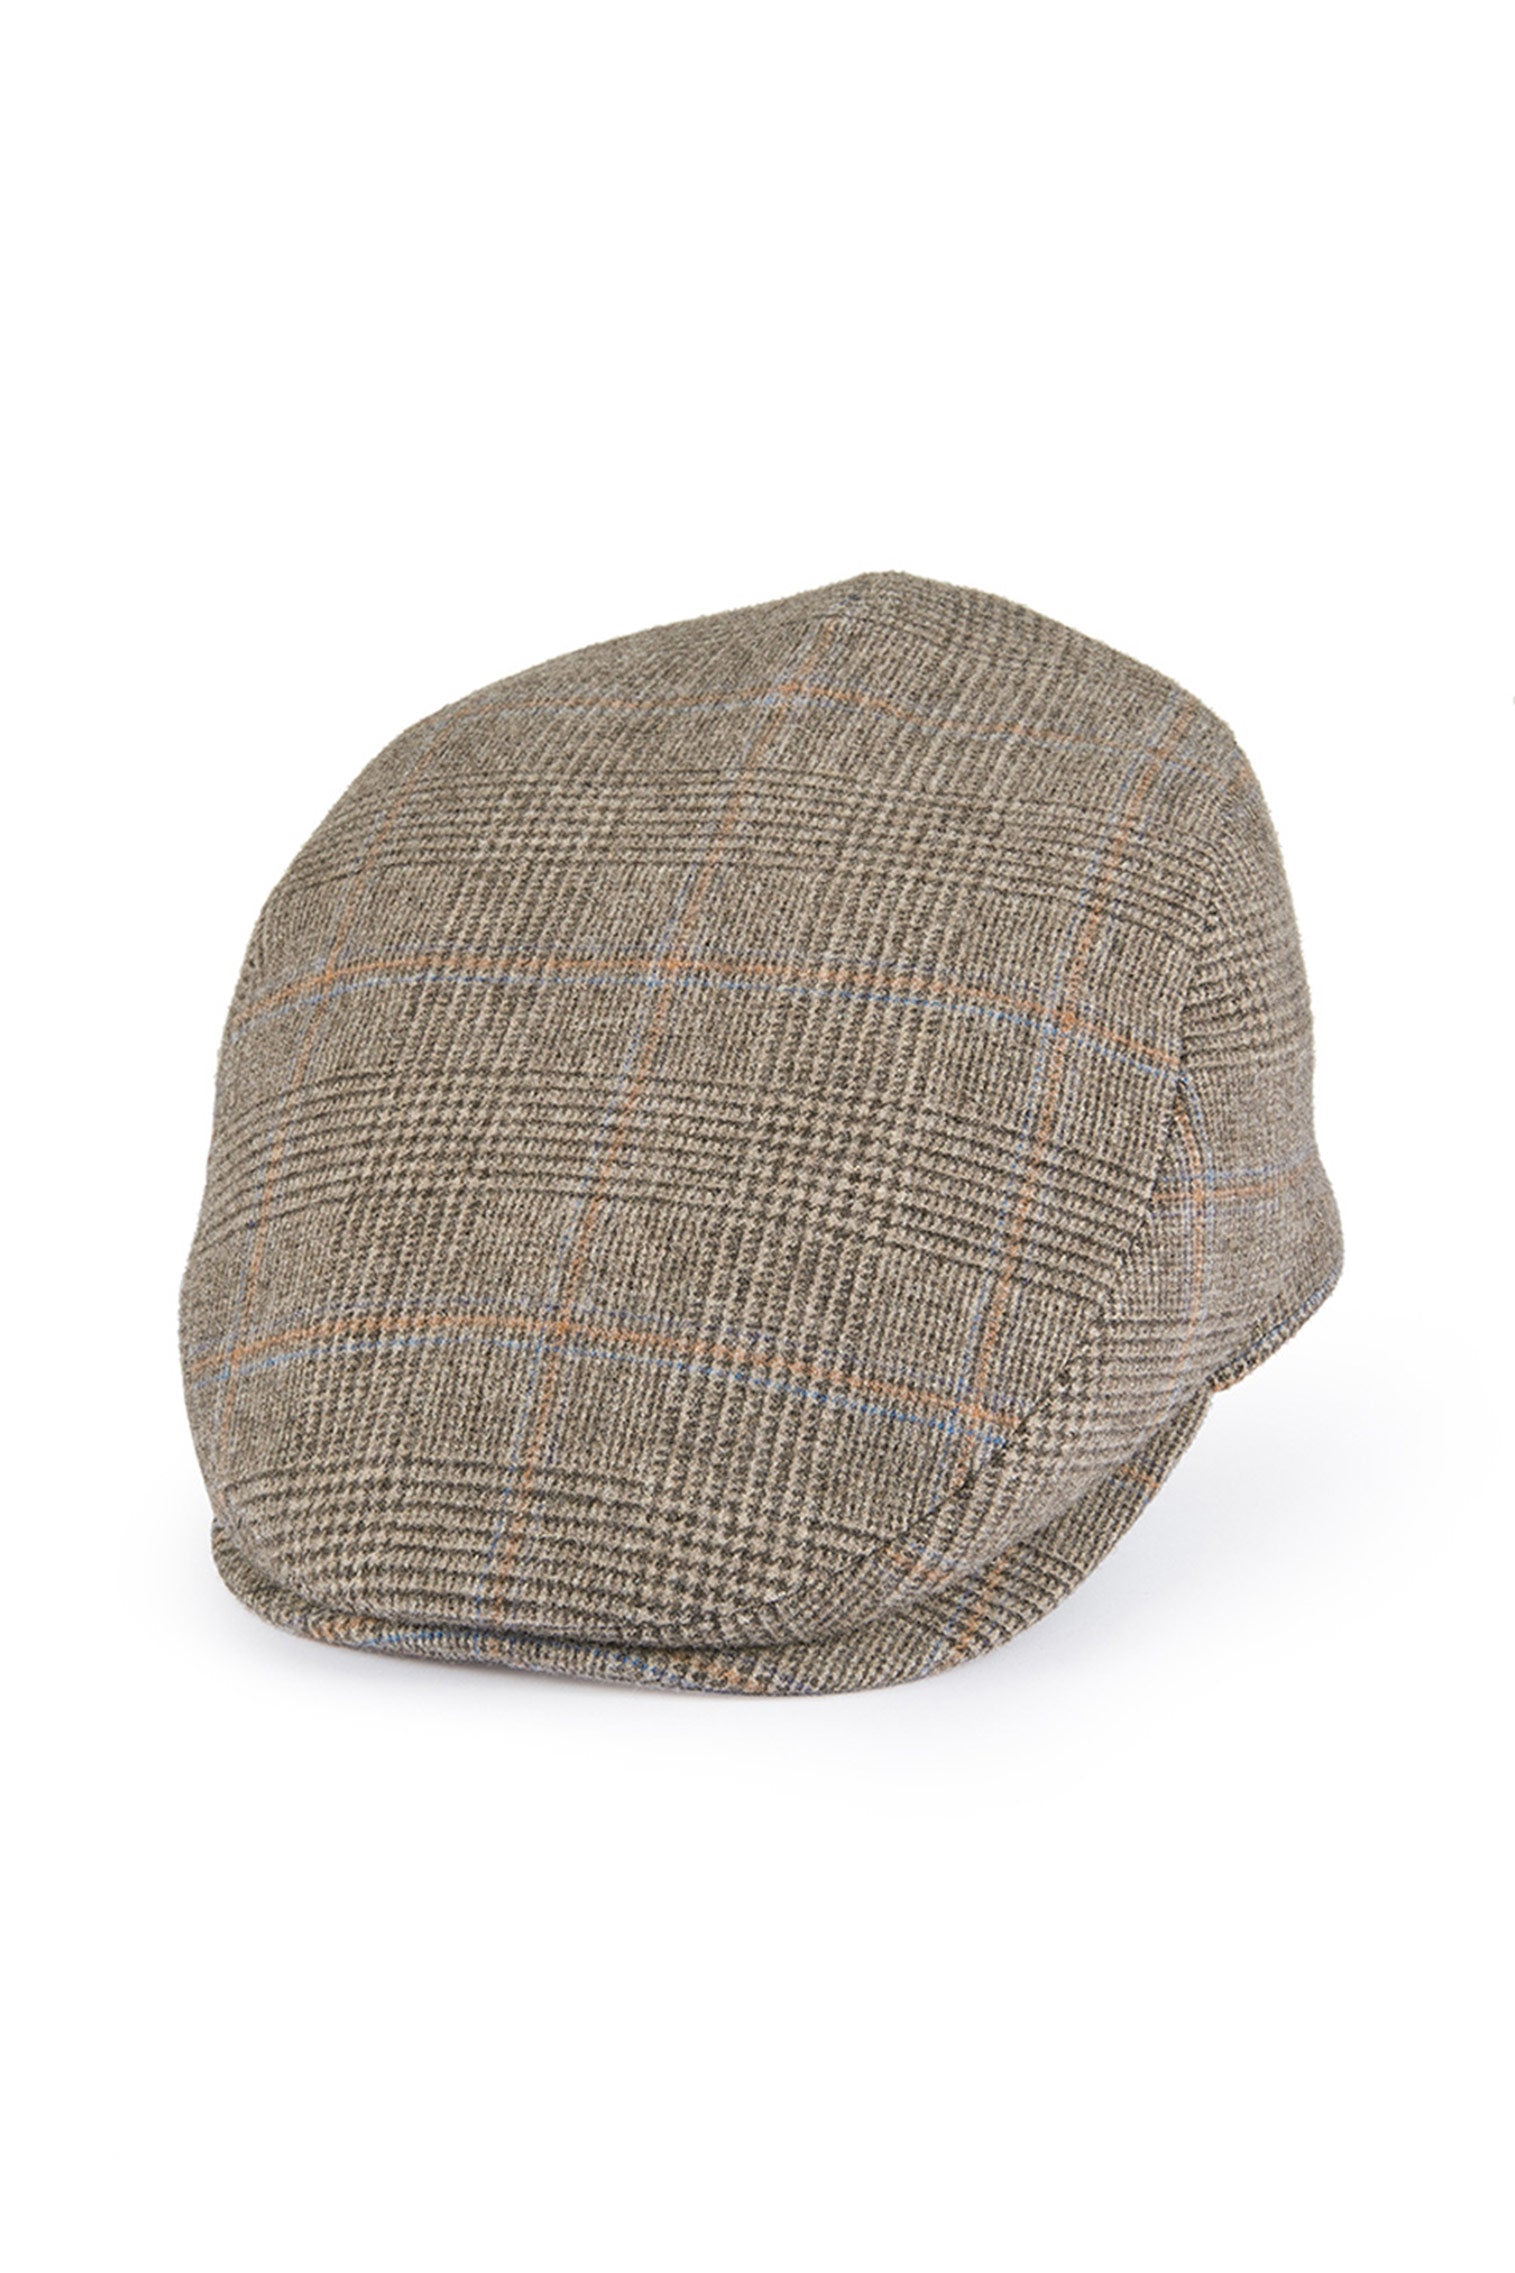 Escorial Wool Grosvenor Flat Cap - Hats for Slimmer Frames - Lock & Co. Hatters London UK